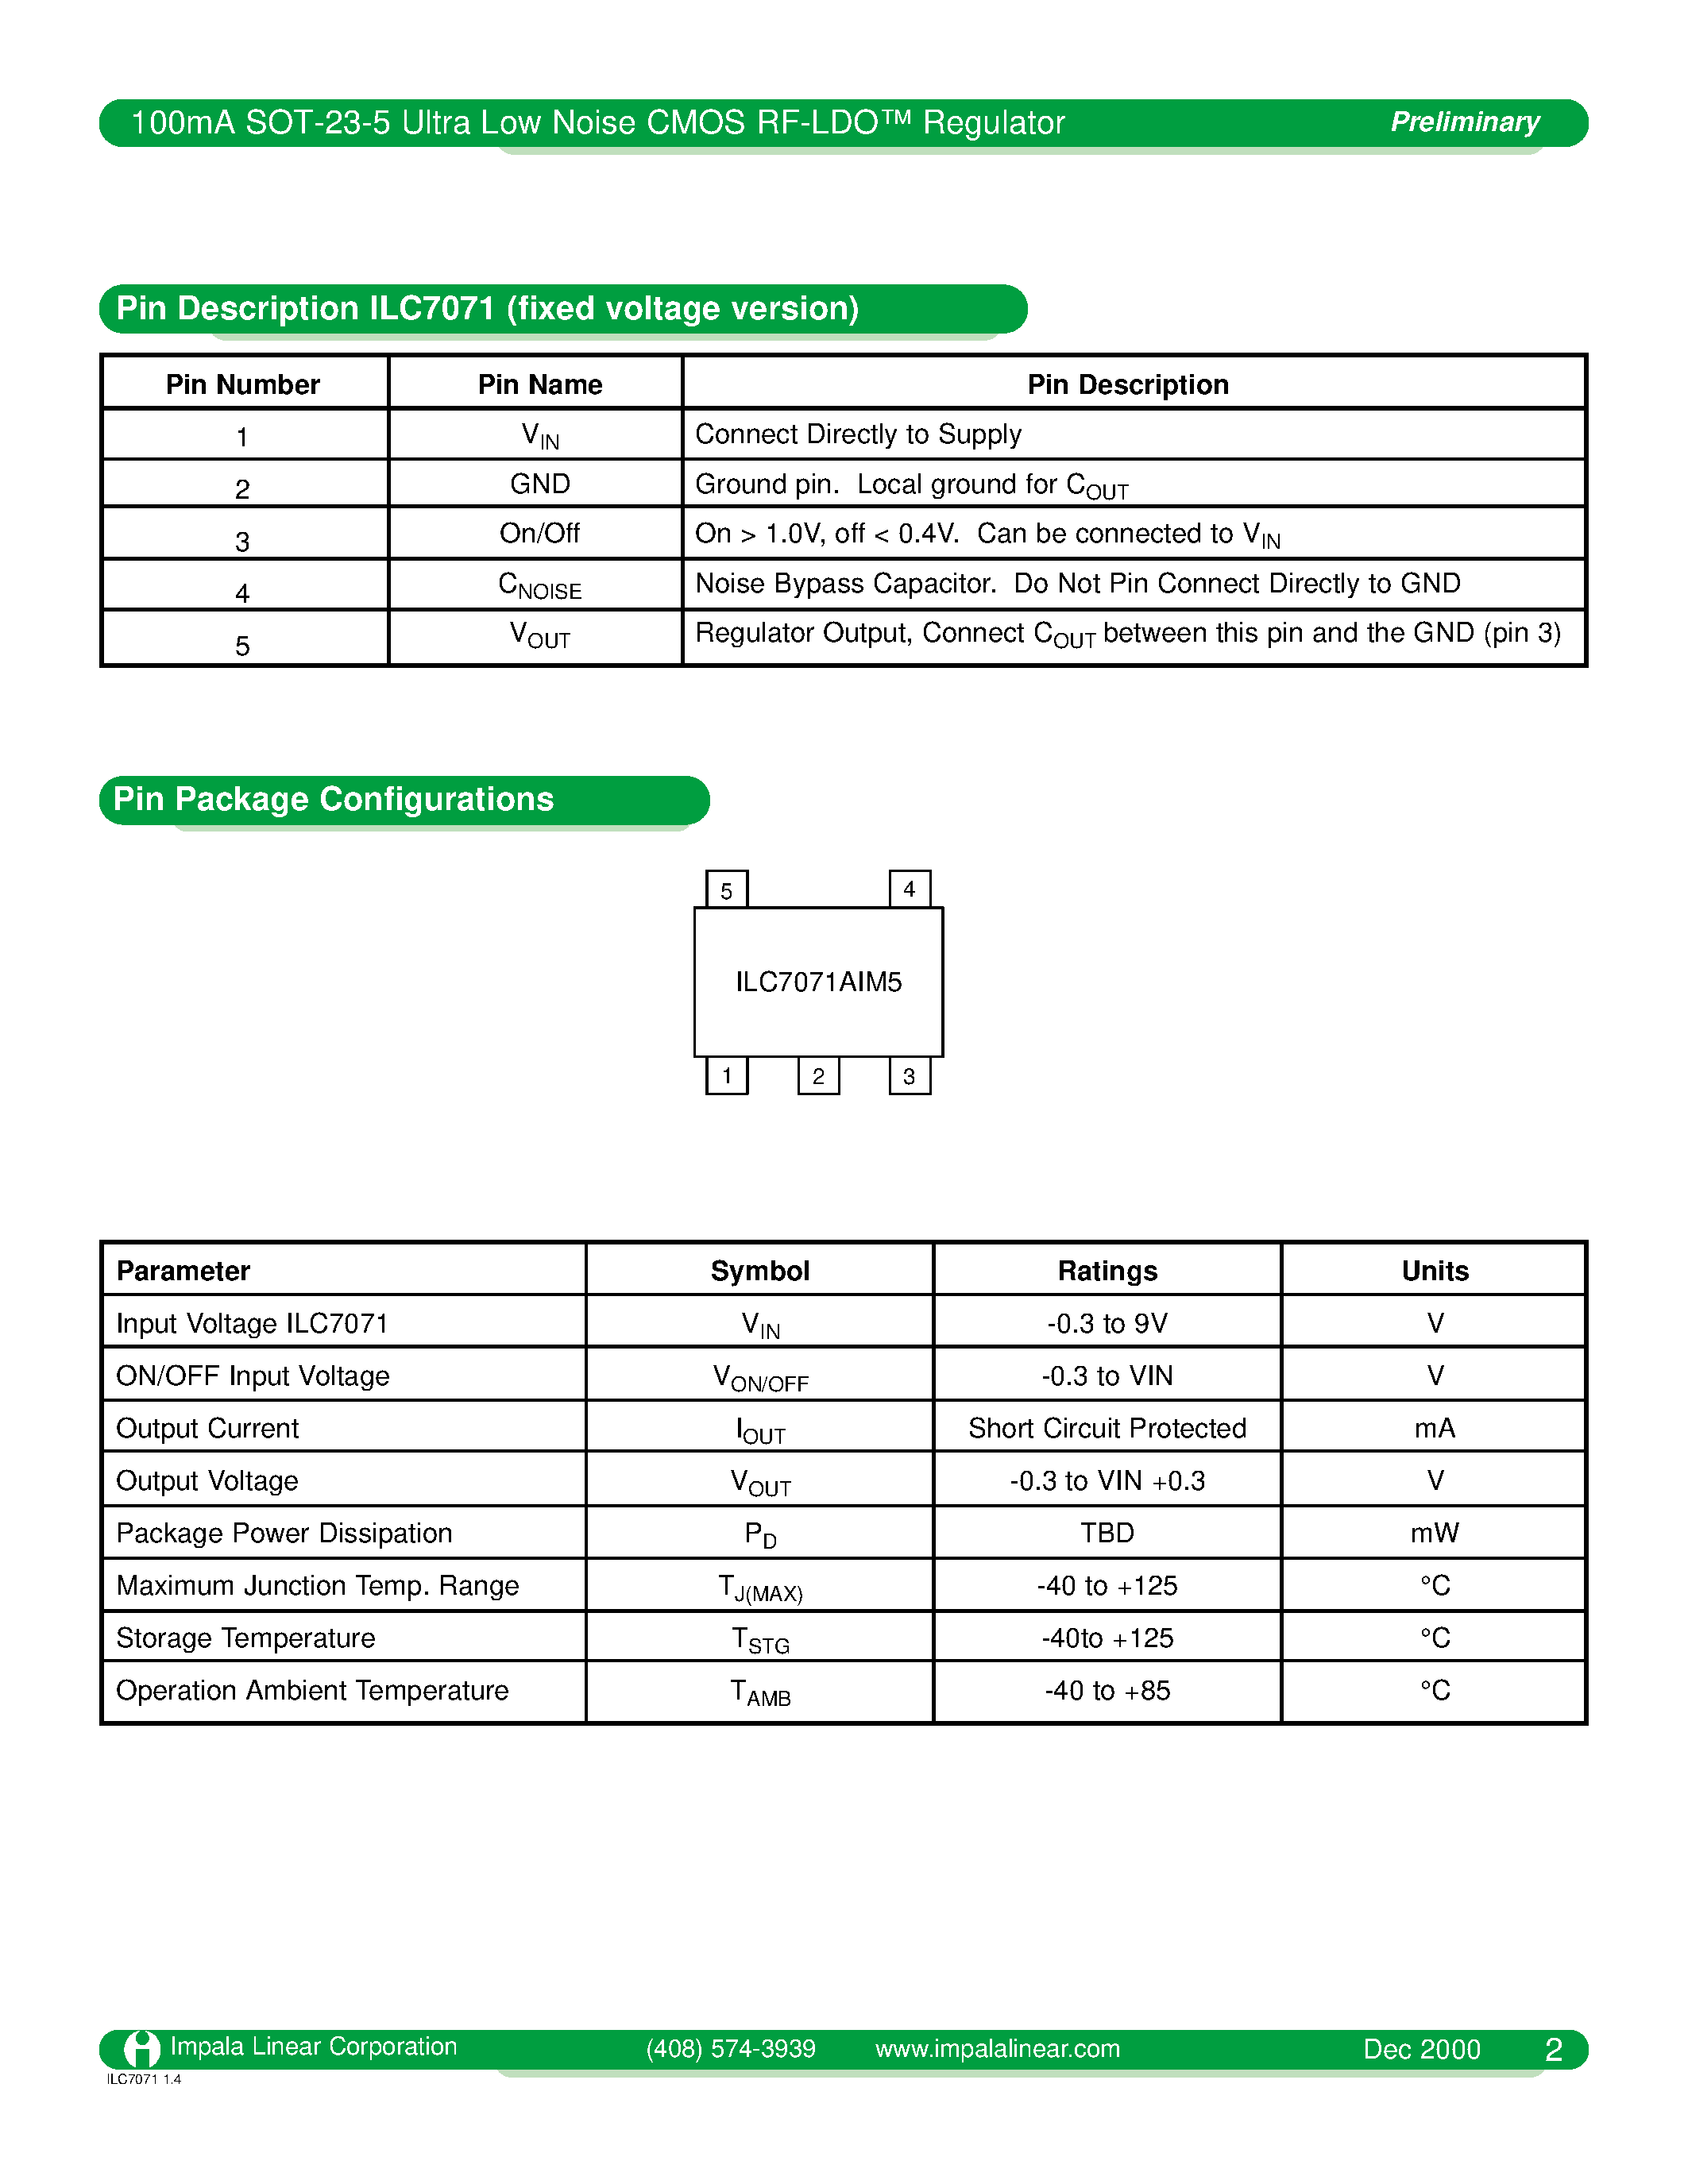 Datasheet ILC7071AIM5-28 - 100MA SOT-23-5 ULTRA LOW NOISE CMOS RF-LDO REGULATOR page 2